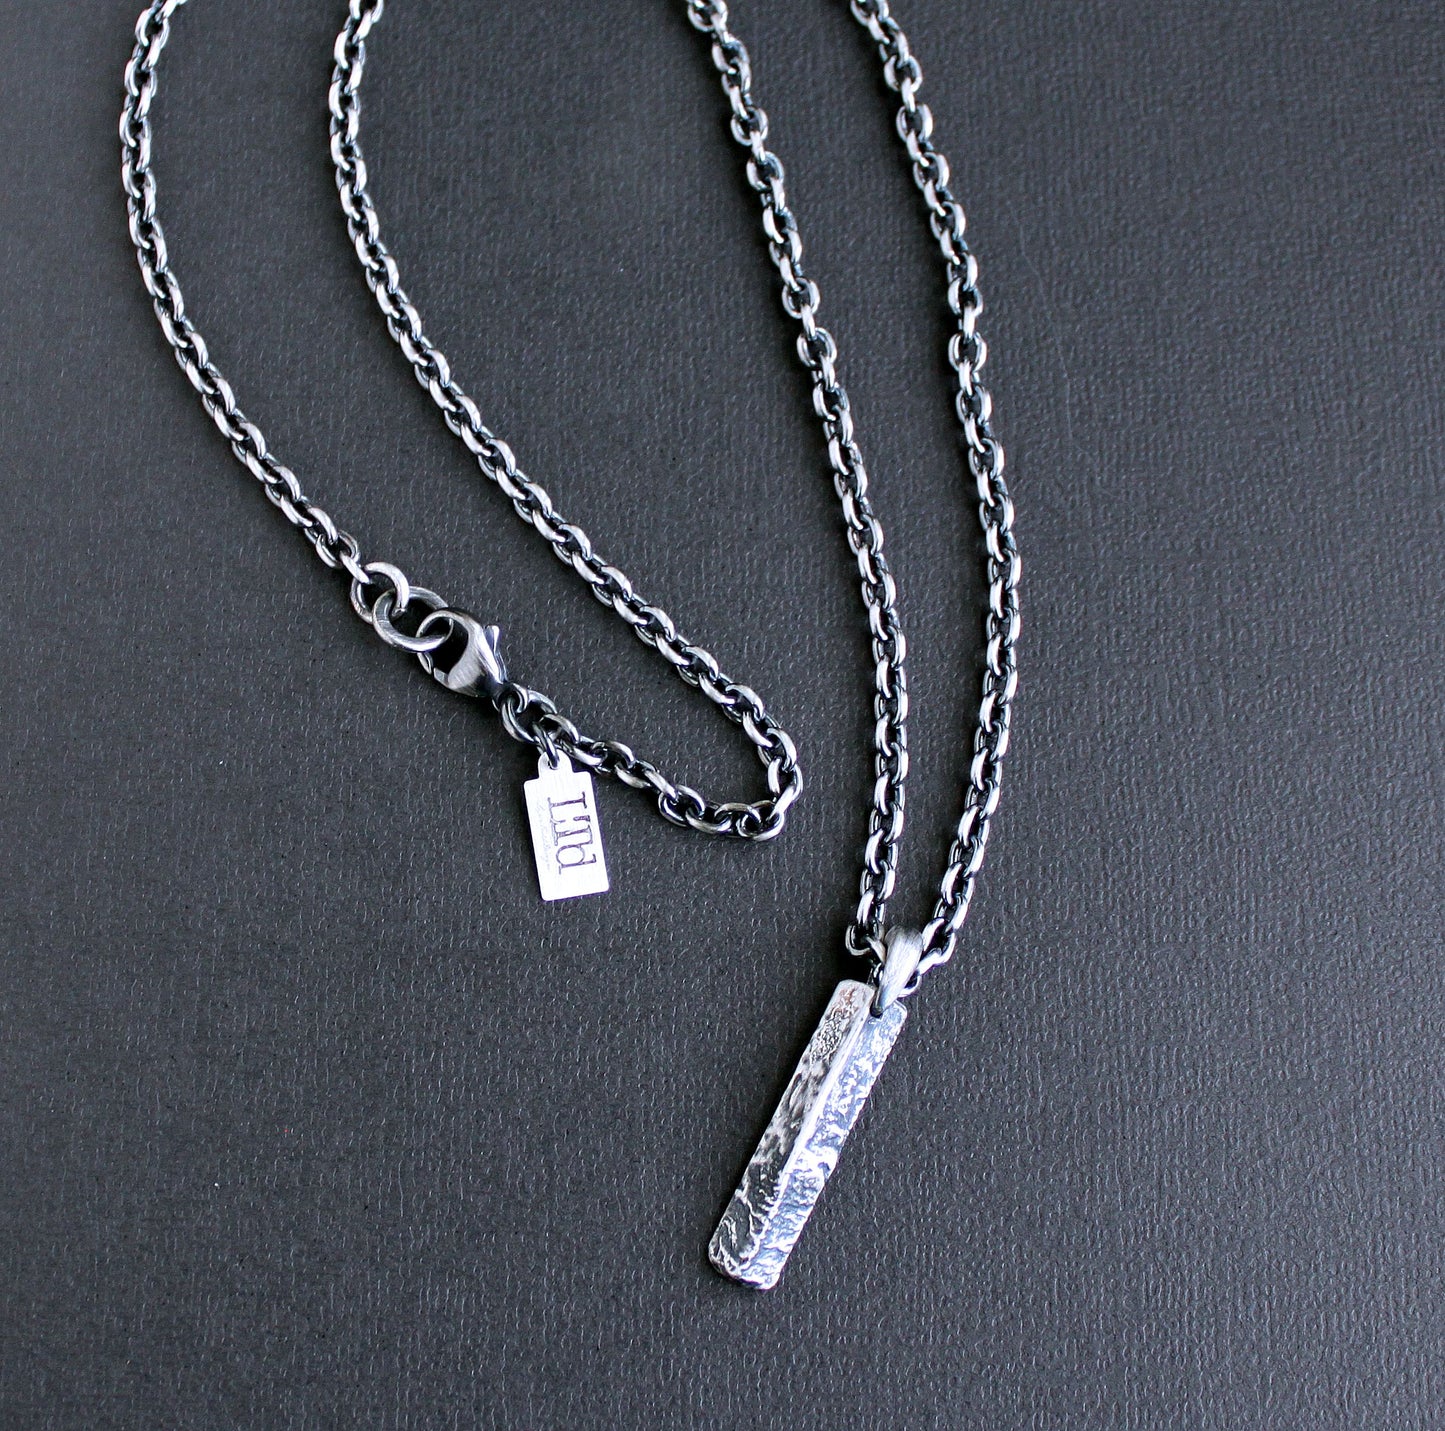 Small Rustic Silver Pendant Necklace